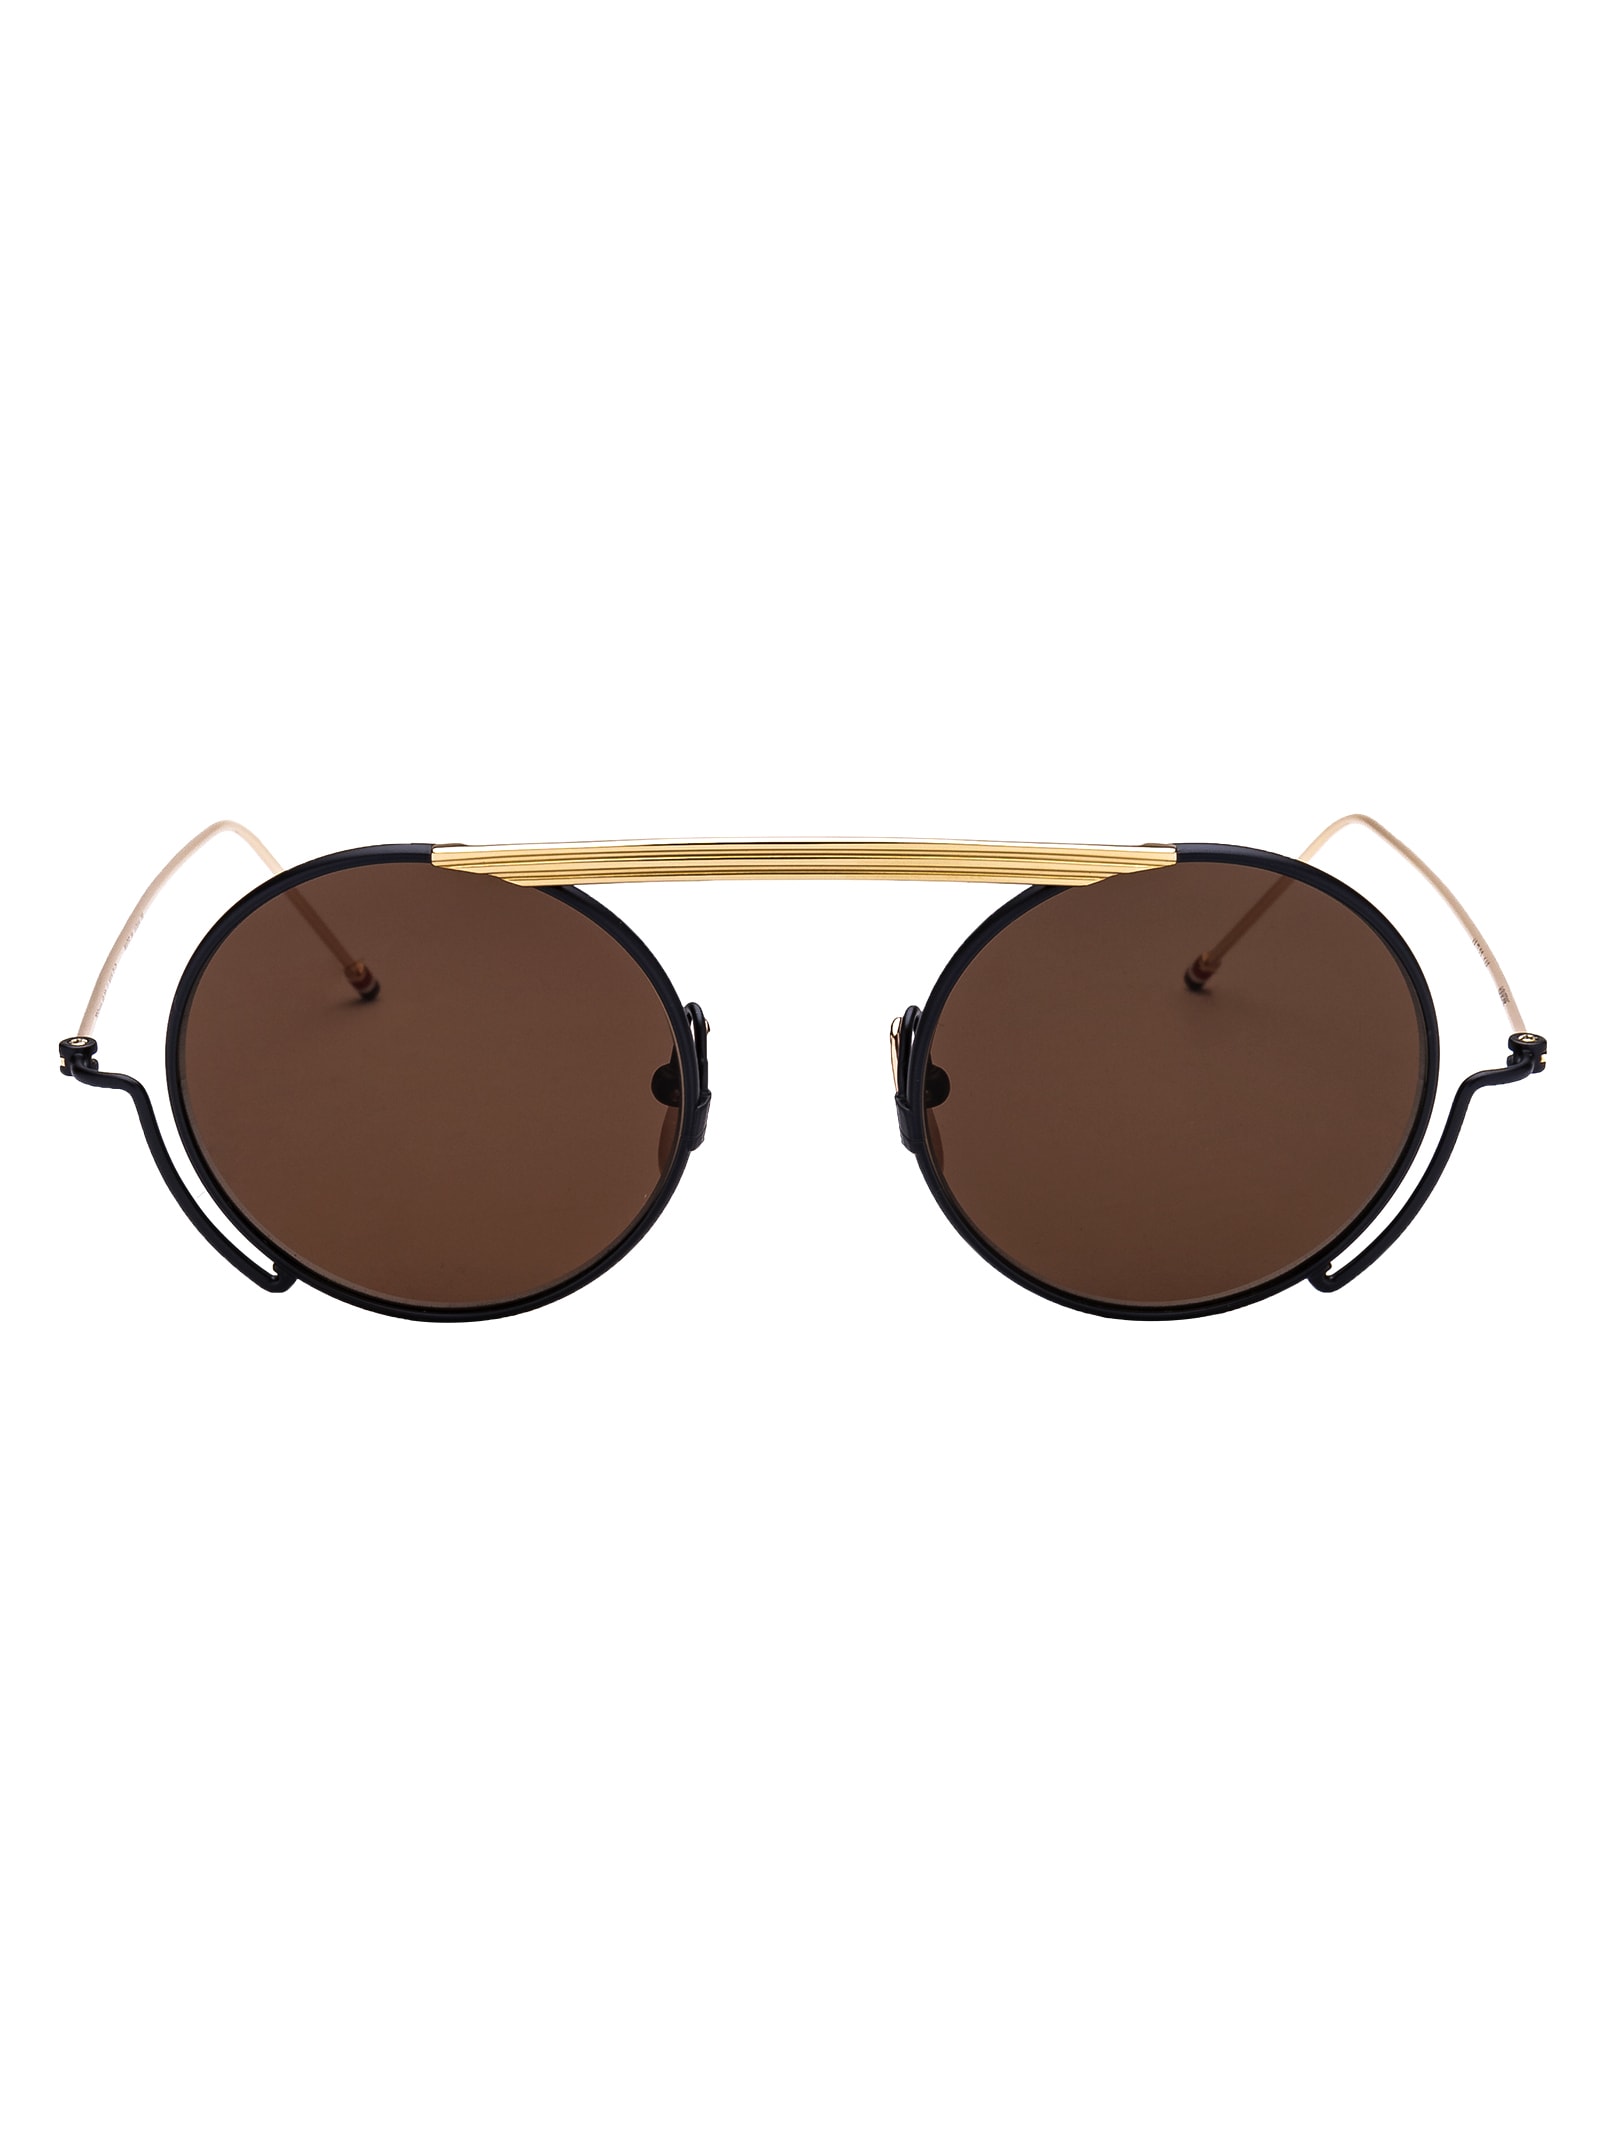 Thom Browne Tb-111 Sunglasses In Matte Navy - White Gold W/ Dark Brown - Ar